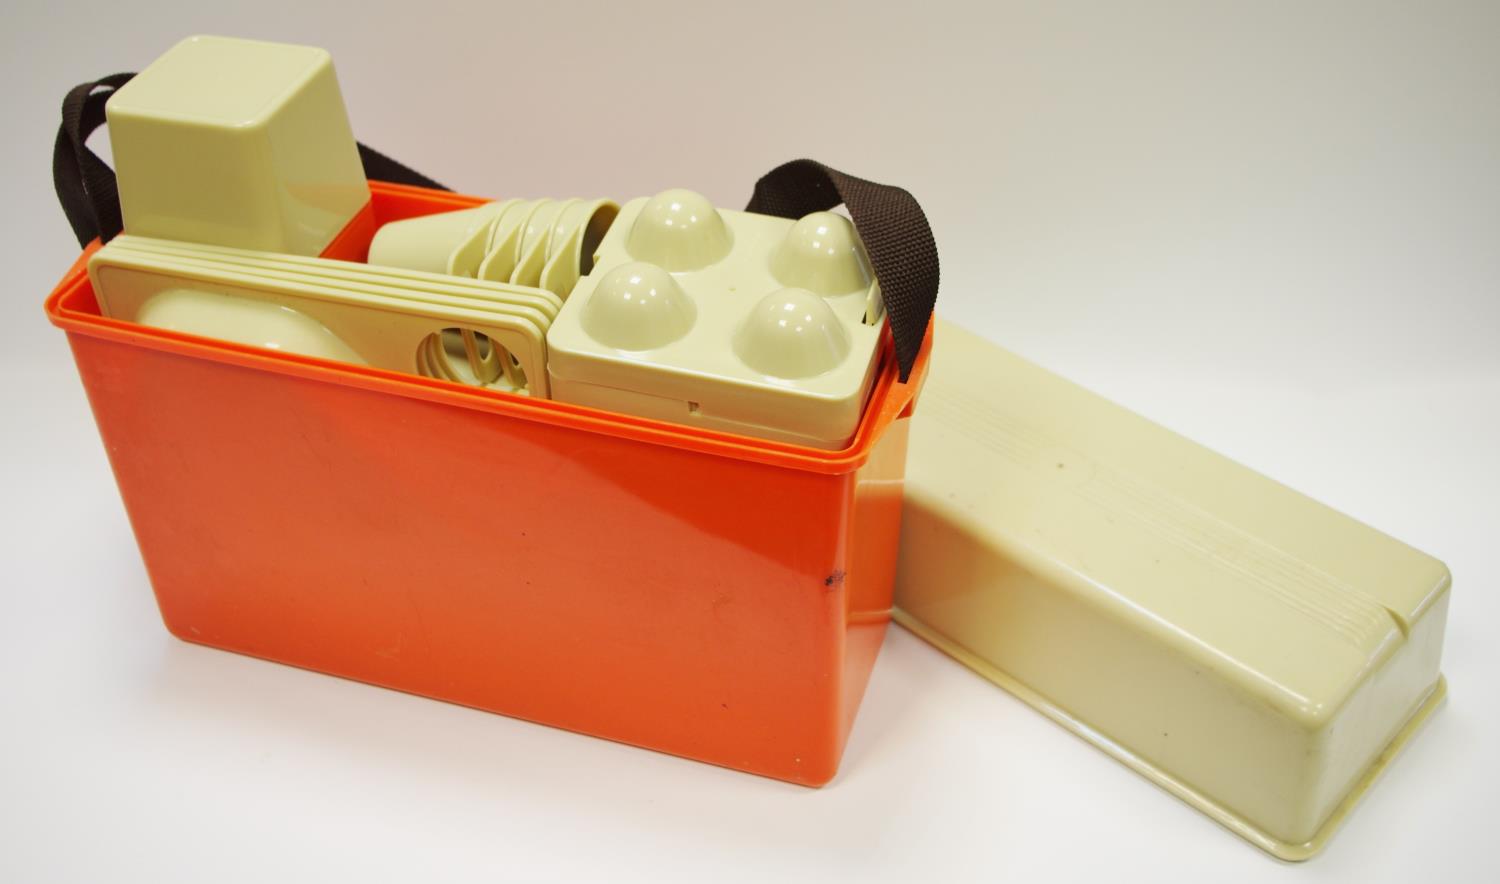 20th century design - an Italian La Plast polypropylene picnic set in original carry box c.1970's - Image 2 of 3